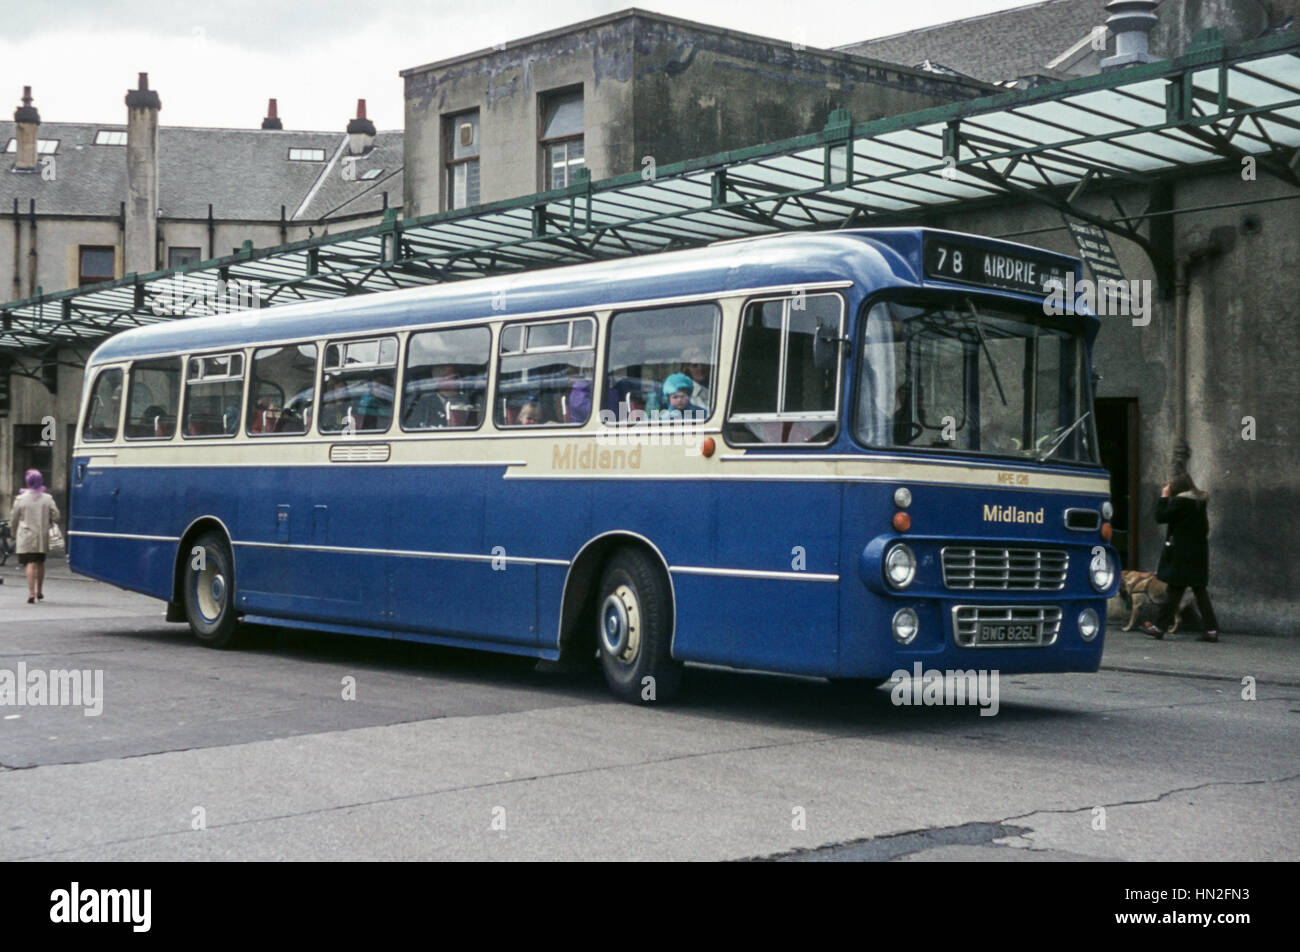 Edimburgo, Reino Unido - 1973: Vintage imagen de autobús en Edimburgo. Alexander Midland MPE 126(registro BWG 826L). Foto de stock